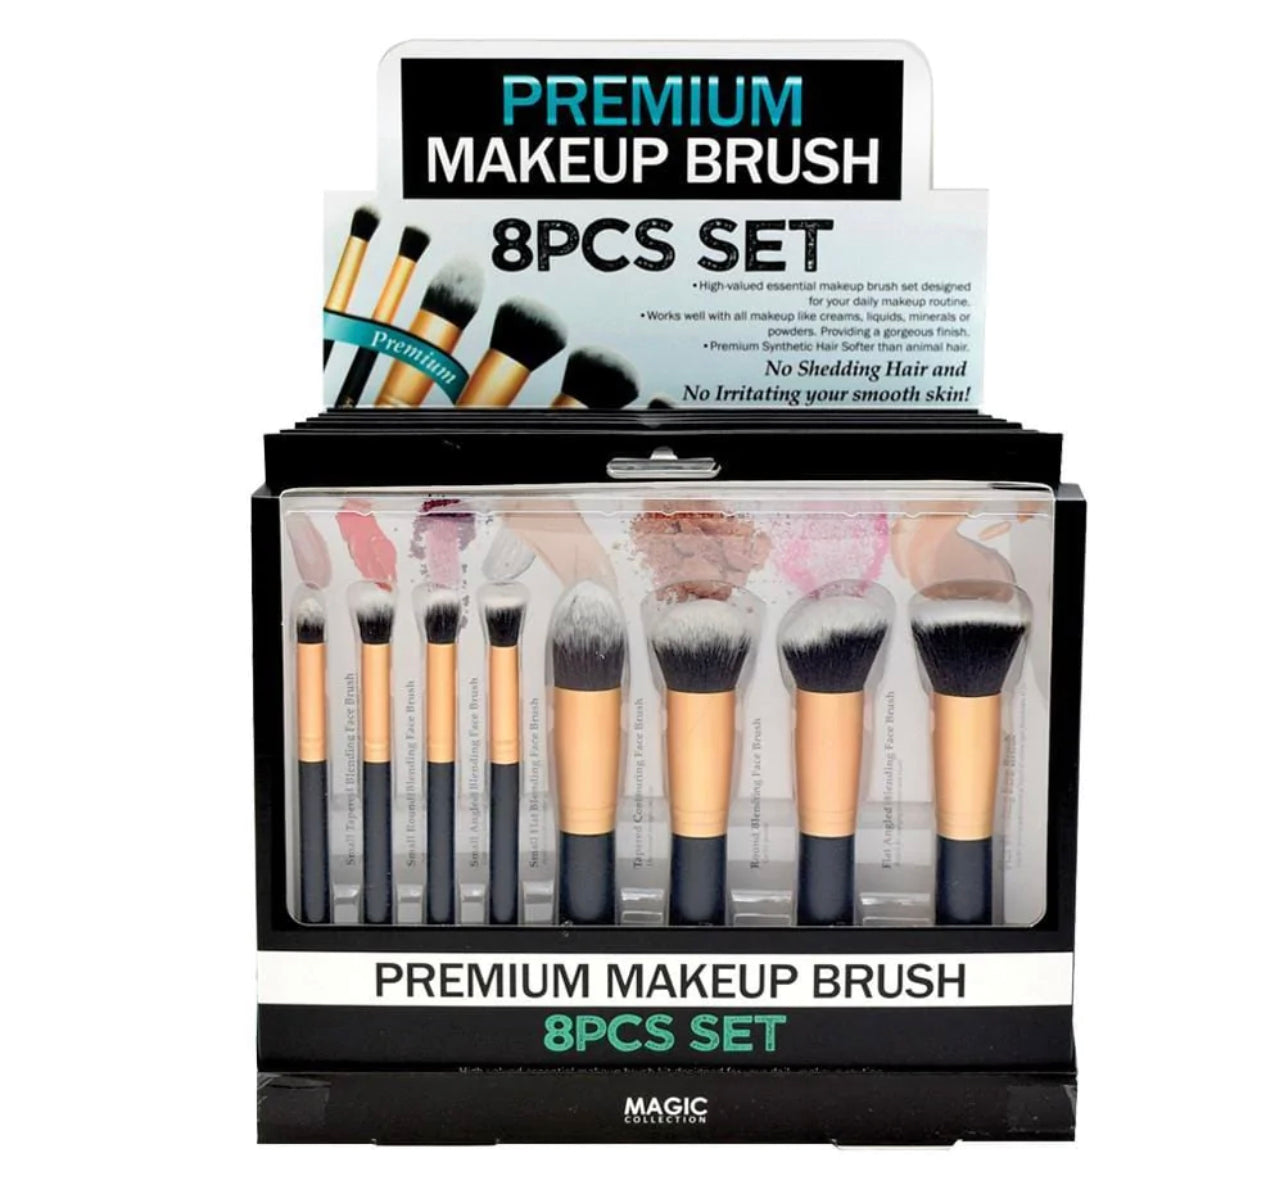 Premium Makeup Brush 8pcs set